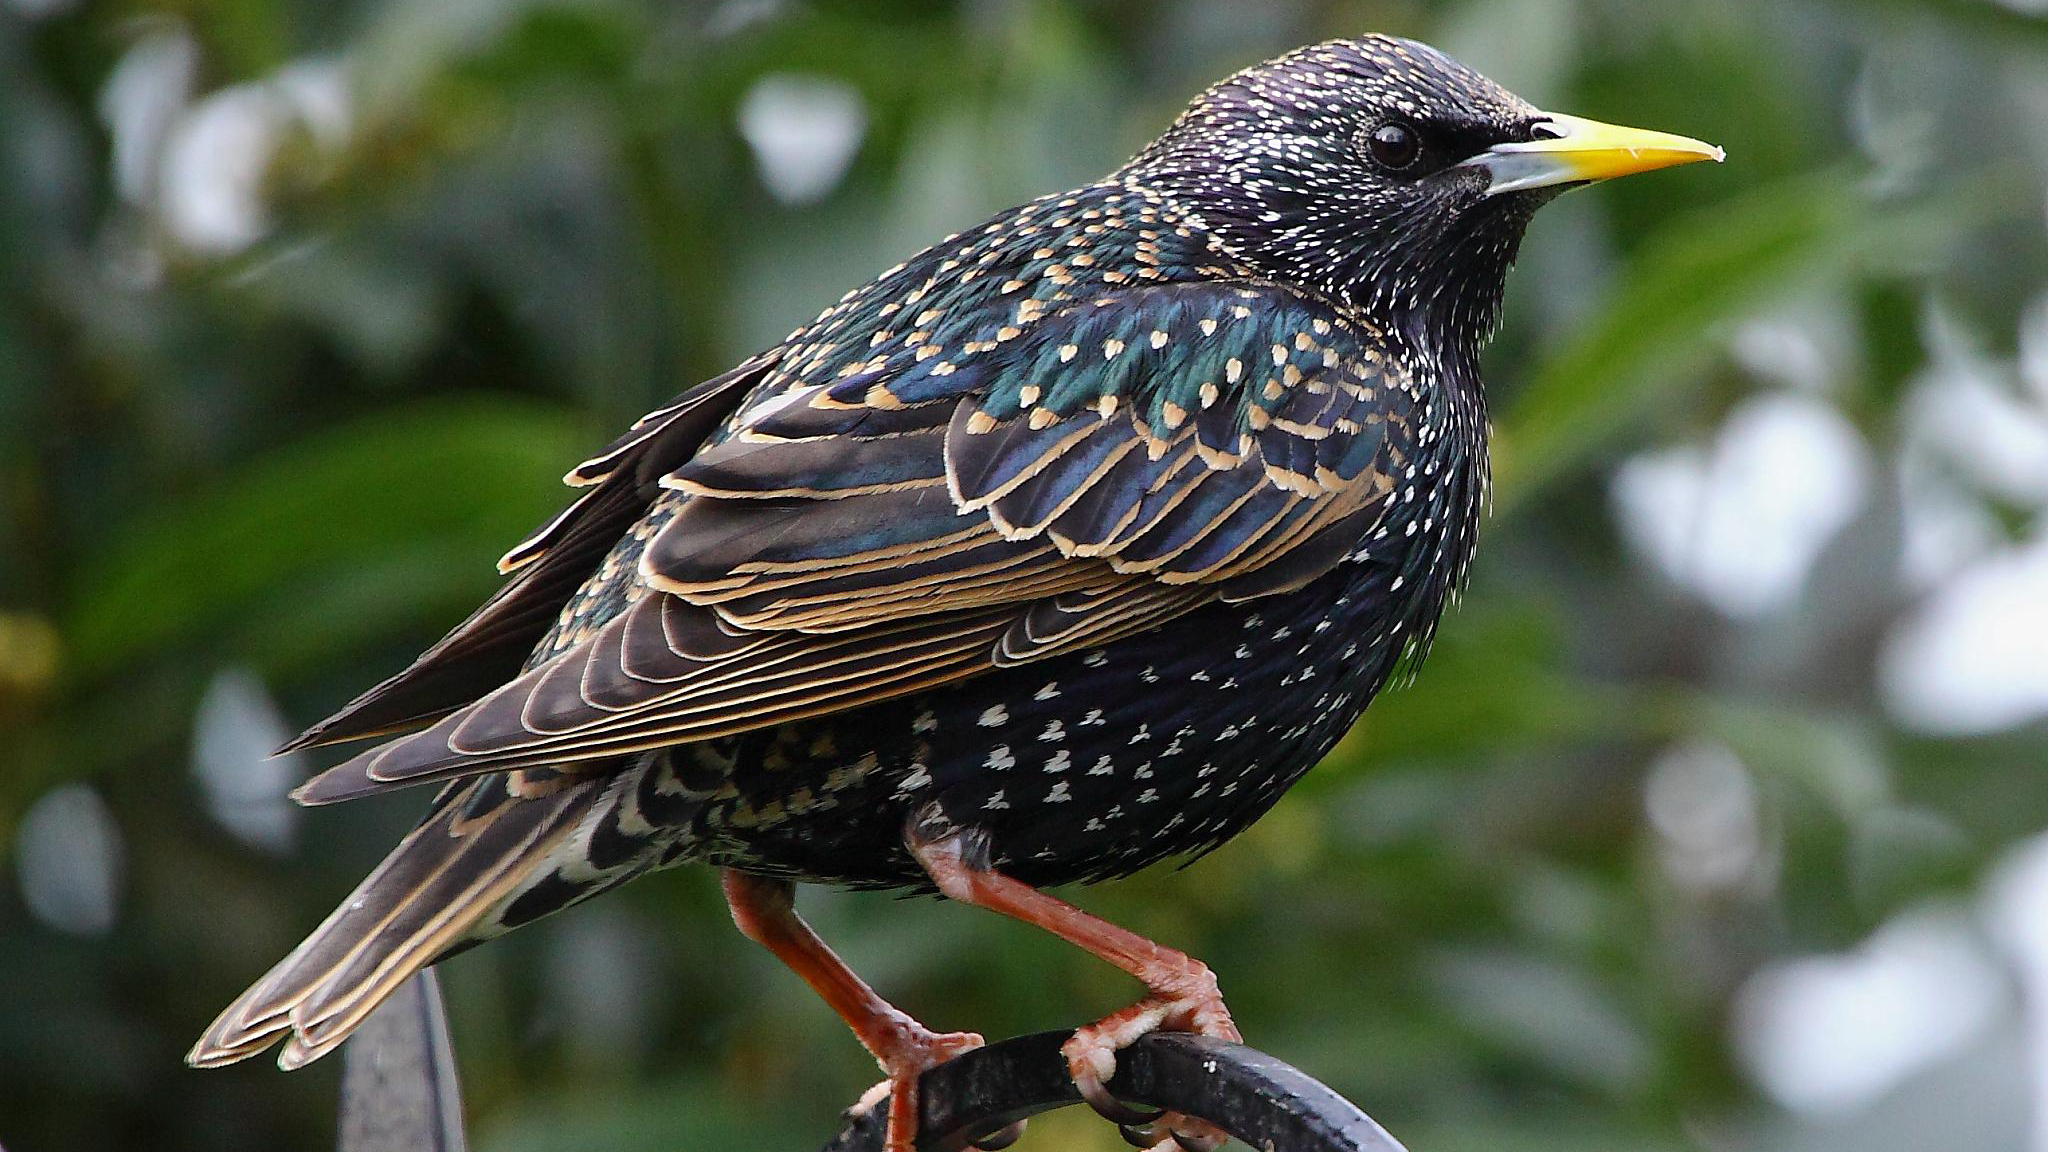 Adult starling. Photo © Tim Felce